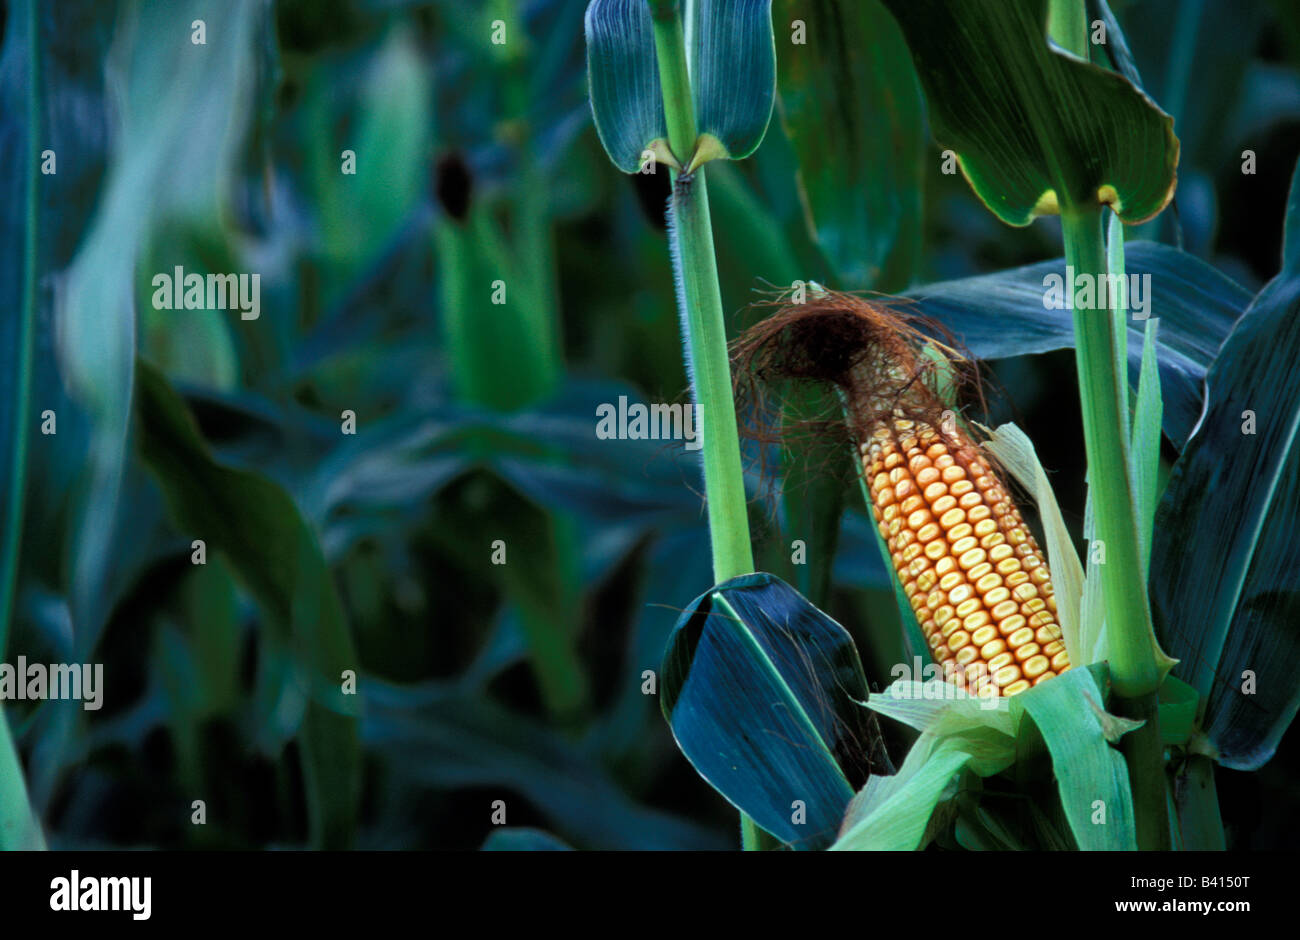 North America, United States, Vermont, Woodstock. Corn cob stalk. Stock Photo